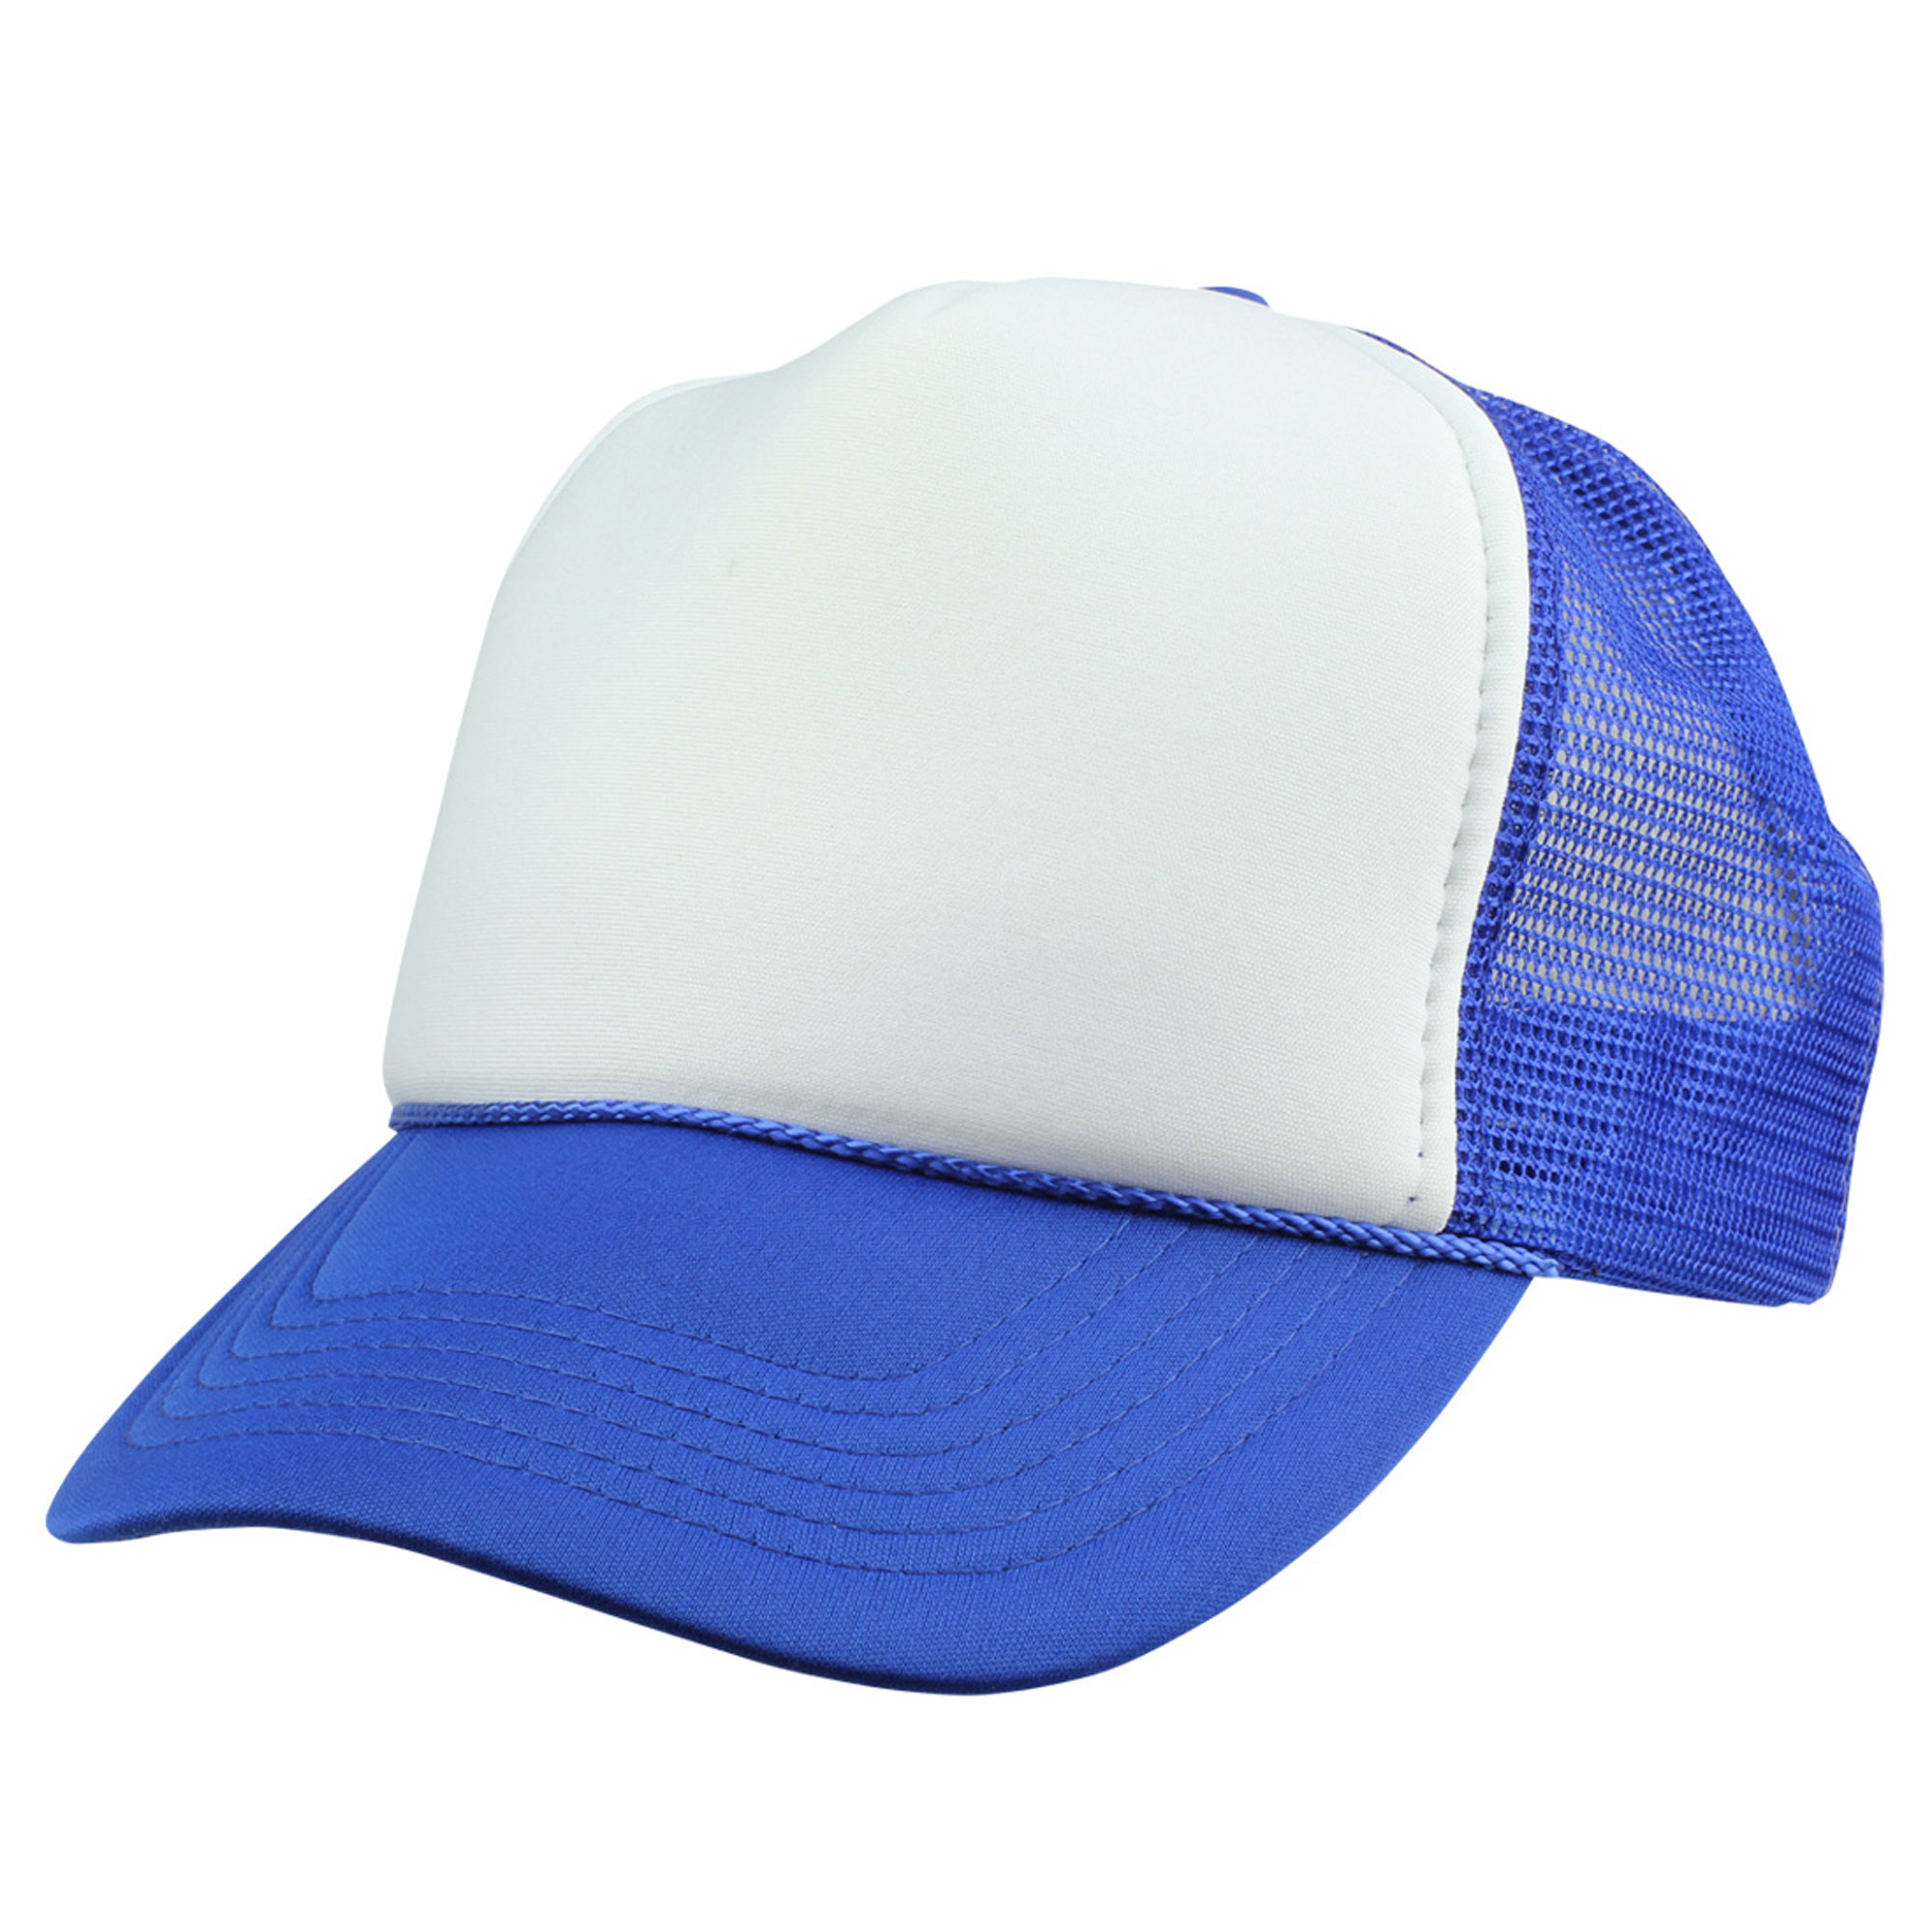 Baseball Cap Adjustable Mesh Sun Hat Snapback for Boys Girls Kids Teens Youth